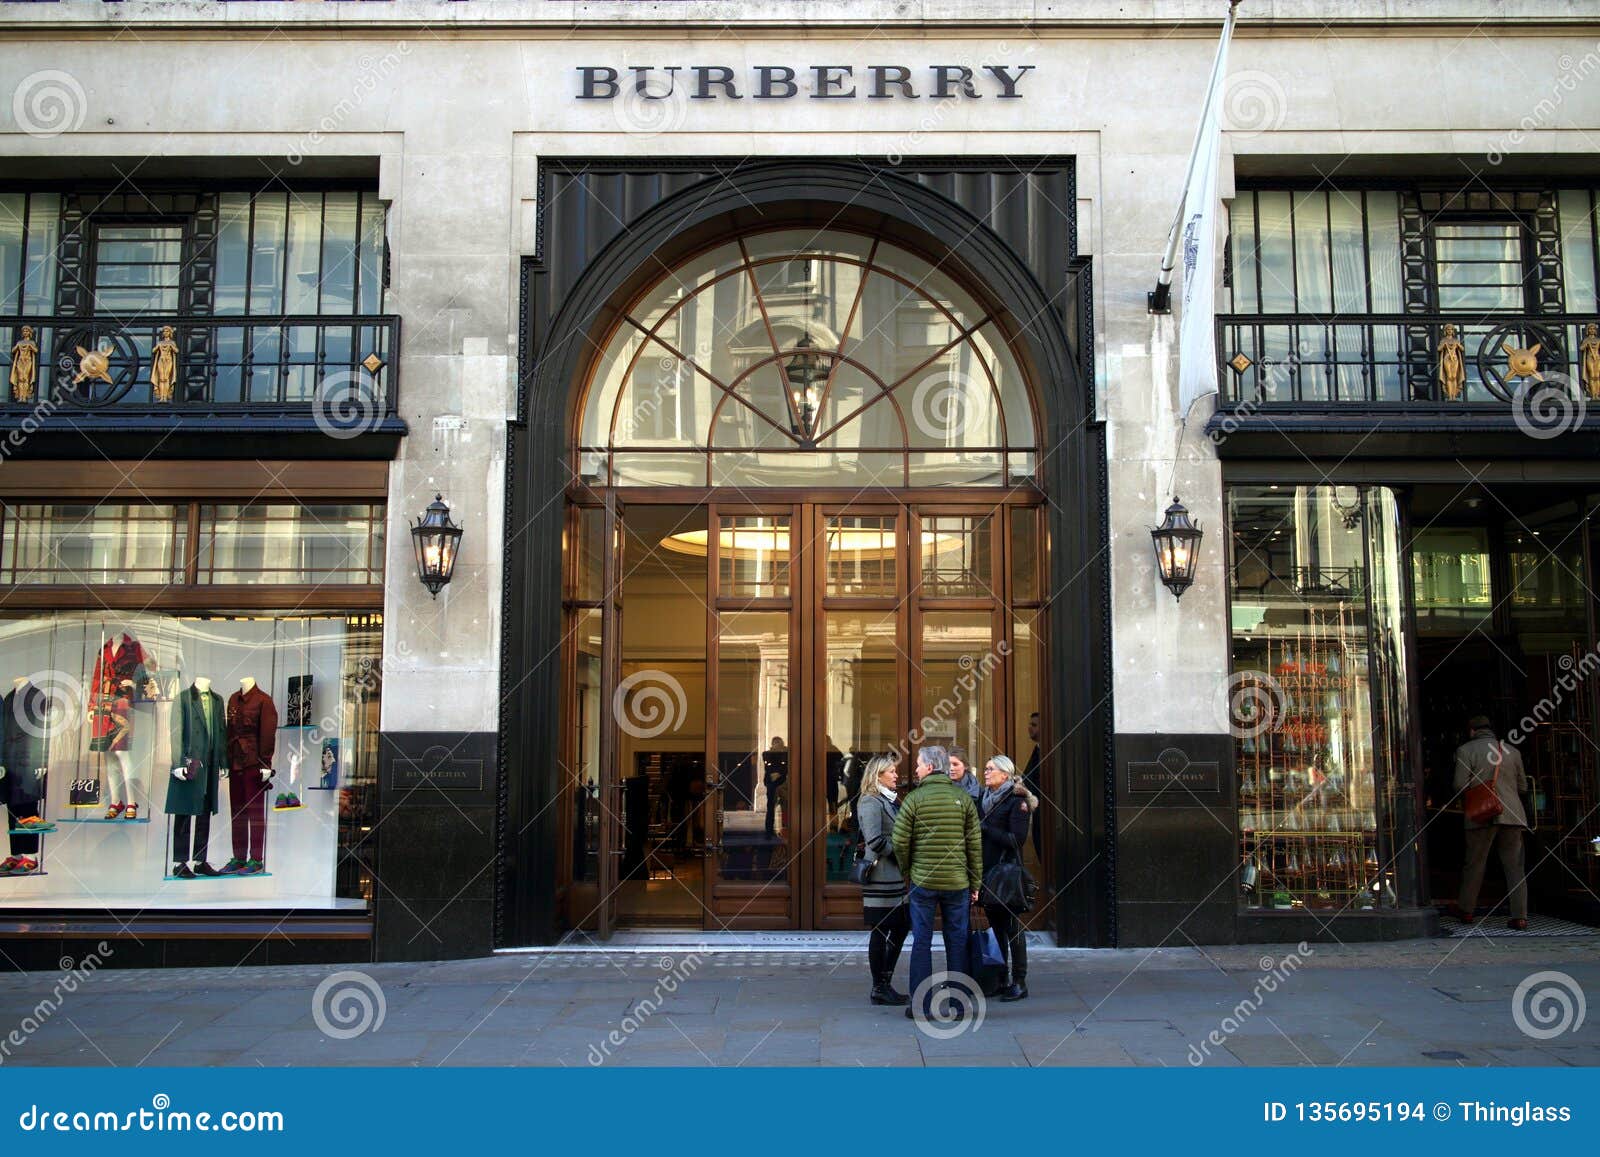 burberry london clothing